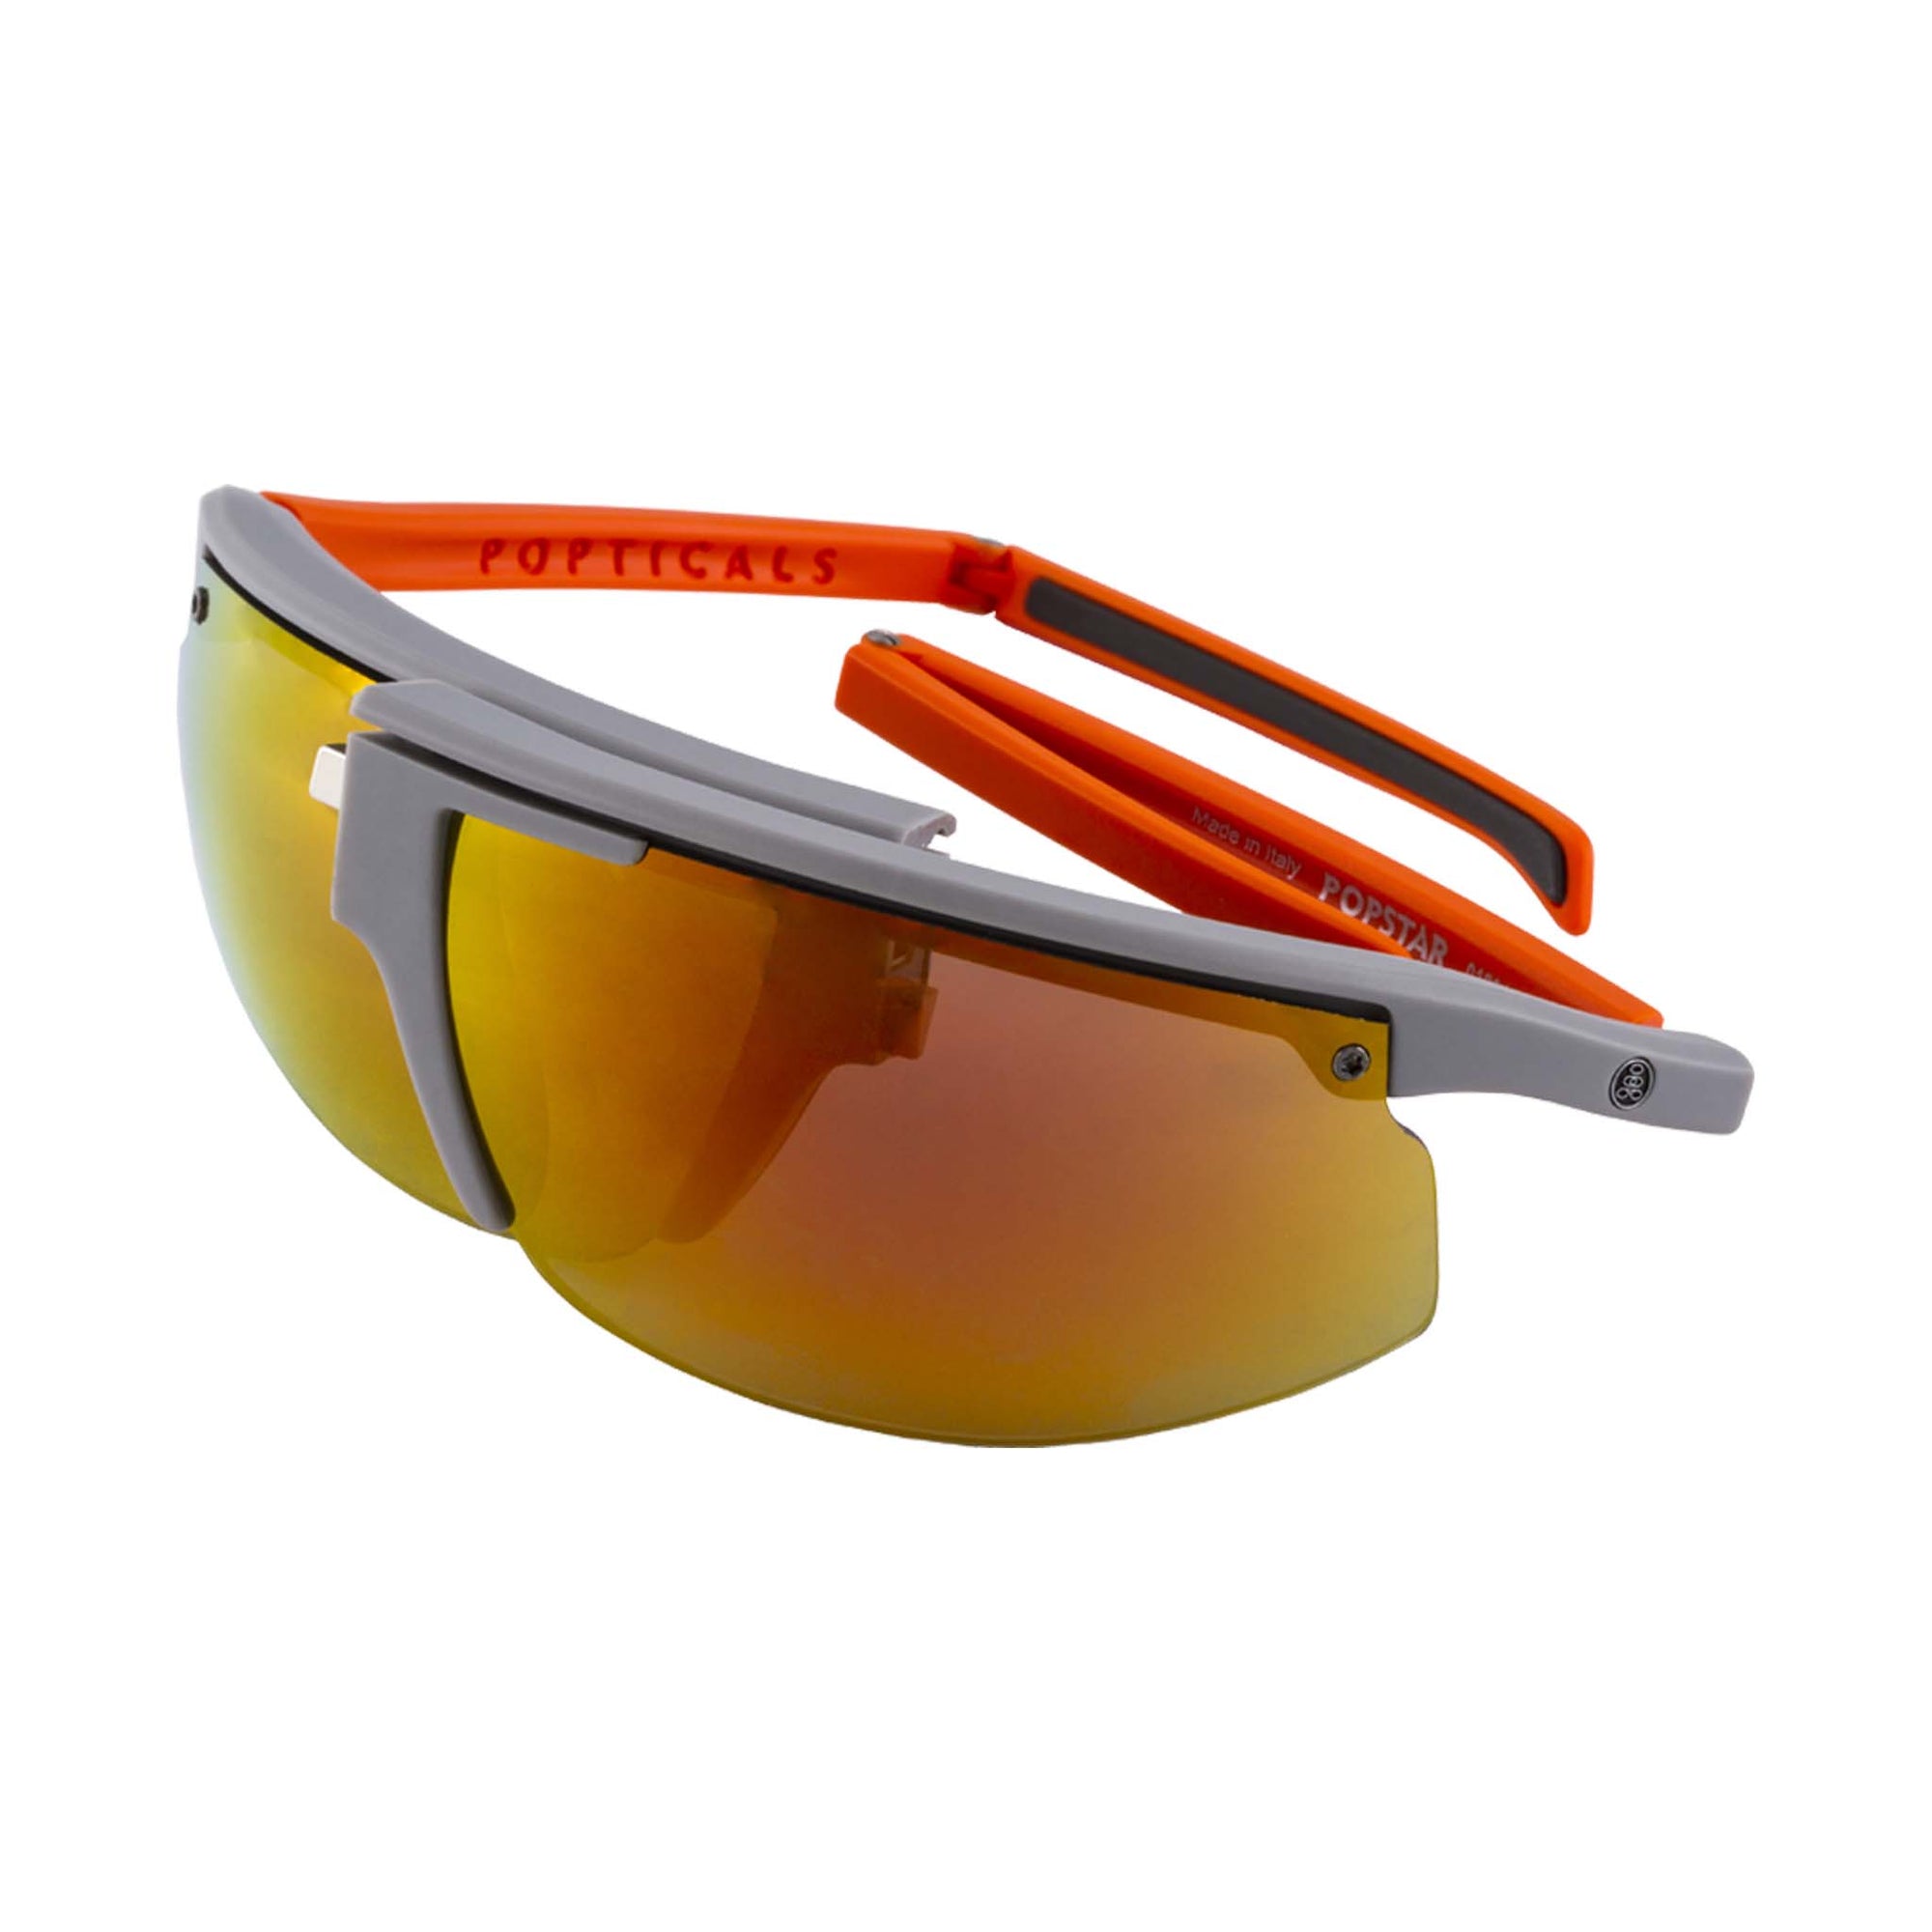 Popticals, Premium Compact Sunglasses, PopStar, 010040-OMGP, Polarized Sunglasses, Matte Gray/Orange Frame, Gray Lenses w/Orange Mirror Finish, Glam View